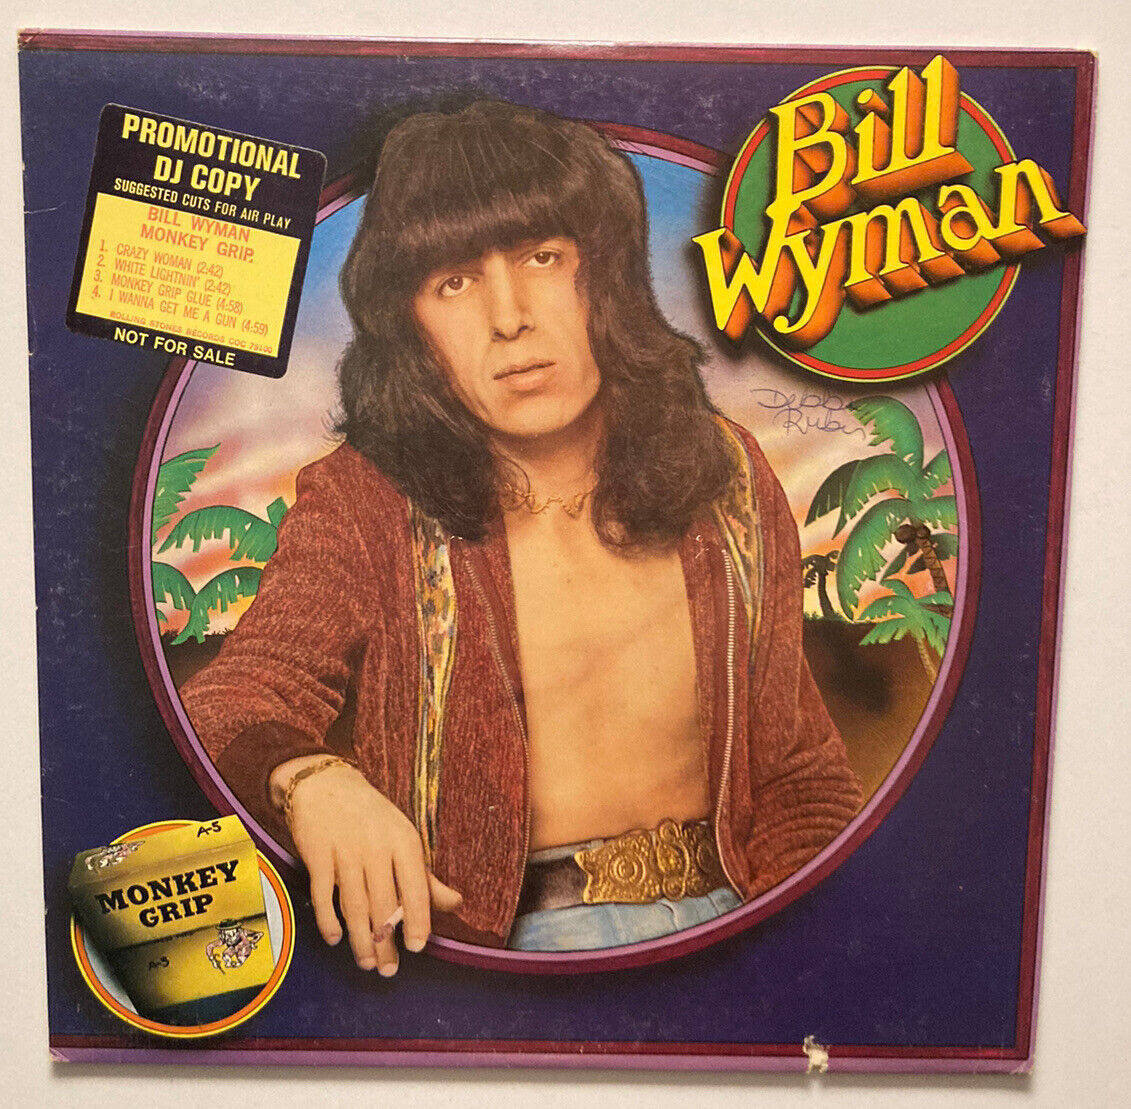 BILL WYMAN Monkey Grip RARE PROMO Vinyl LP Rolling Stones Records COC 79100  VG+